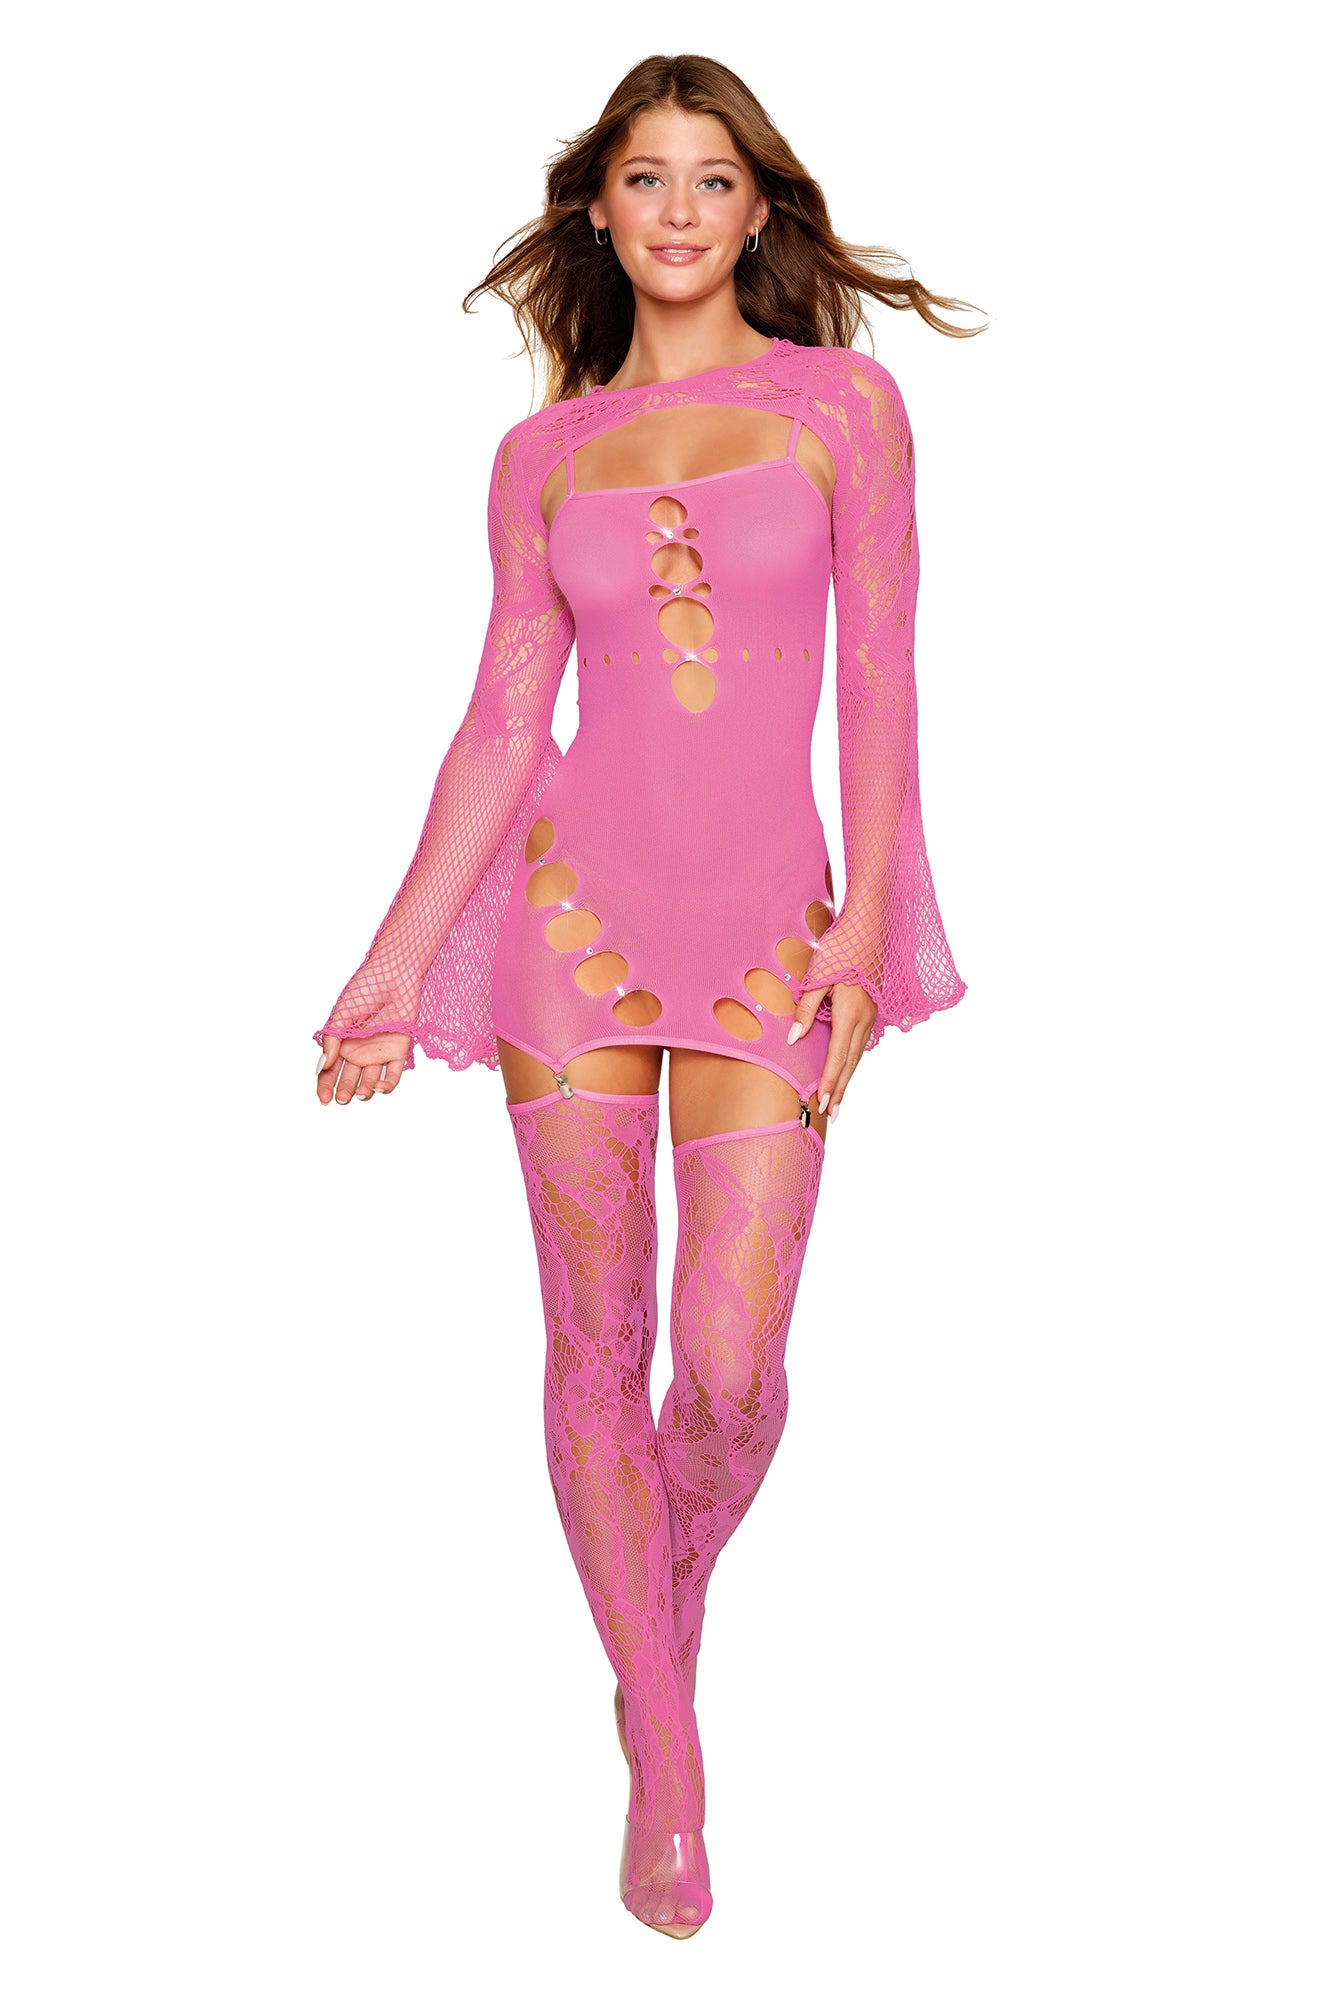 Garter Dress With Thigh High and Shrug - One Size  - Milkshake Pink-1